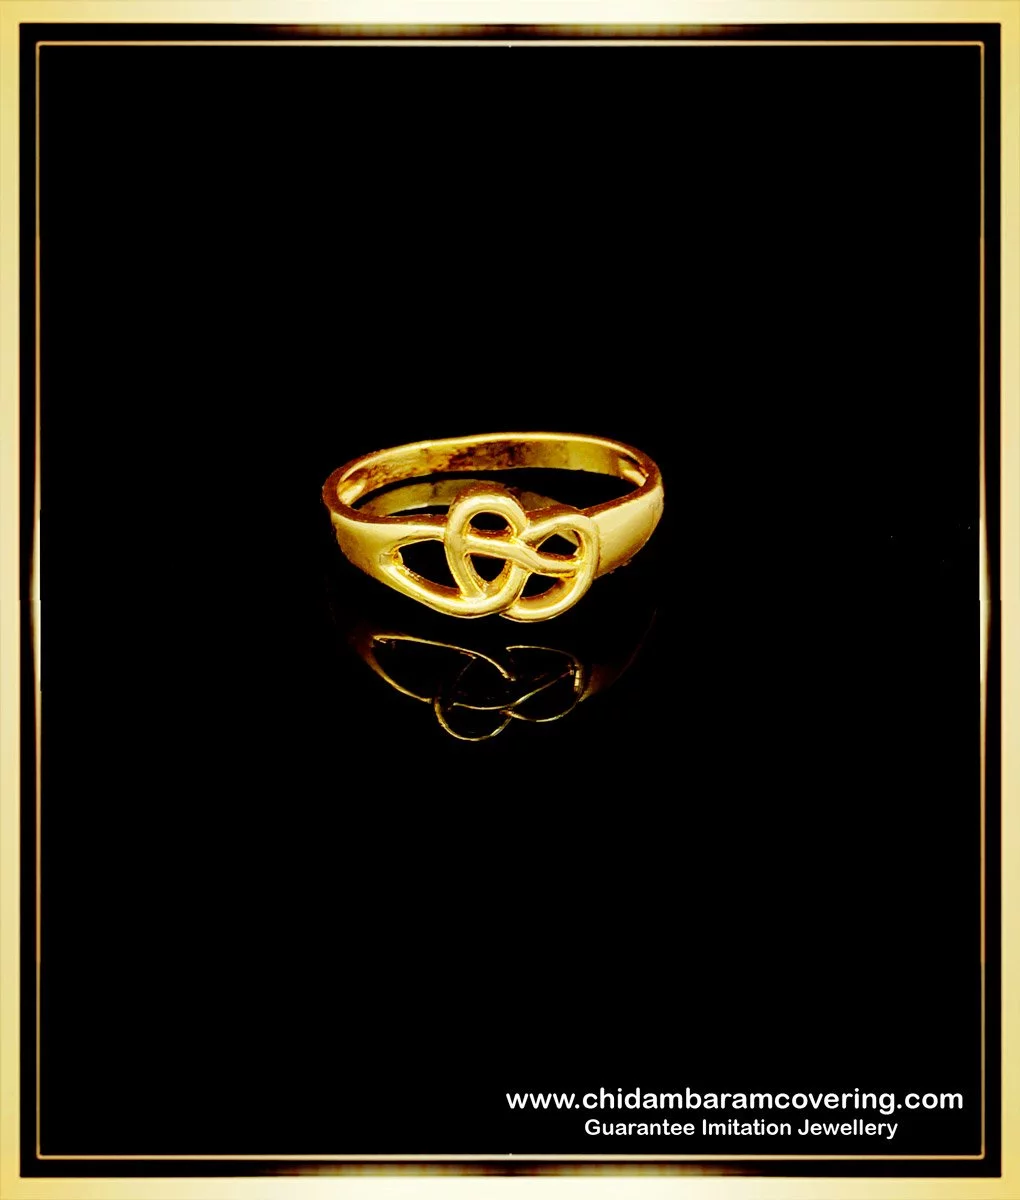 Buy 250+ Designs Online | BlueStone.com - India's #1 Online Jewellery Brand